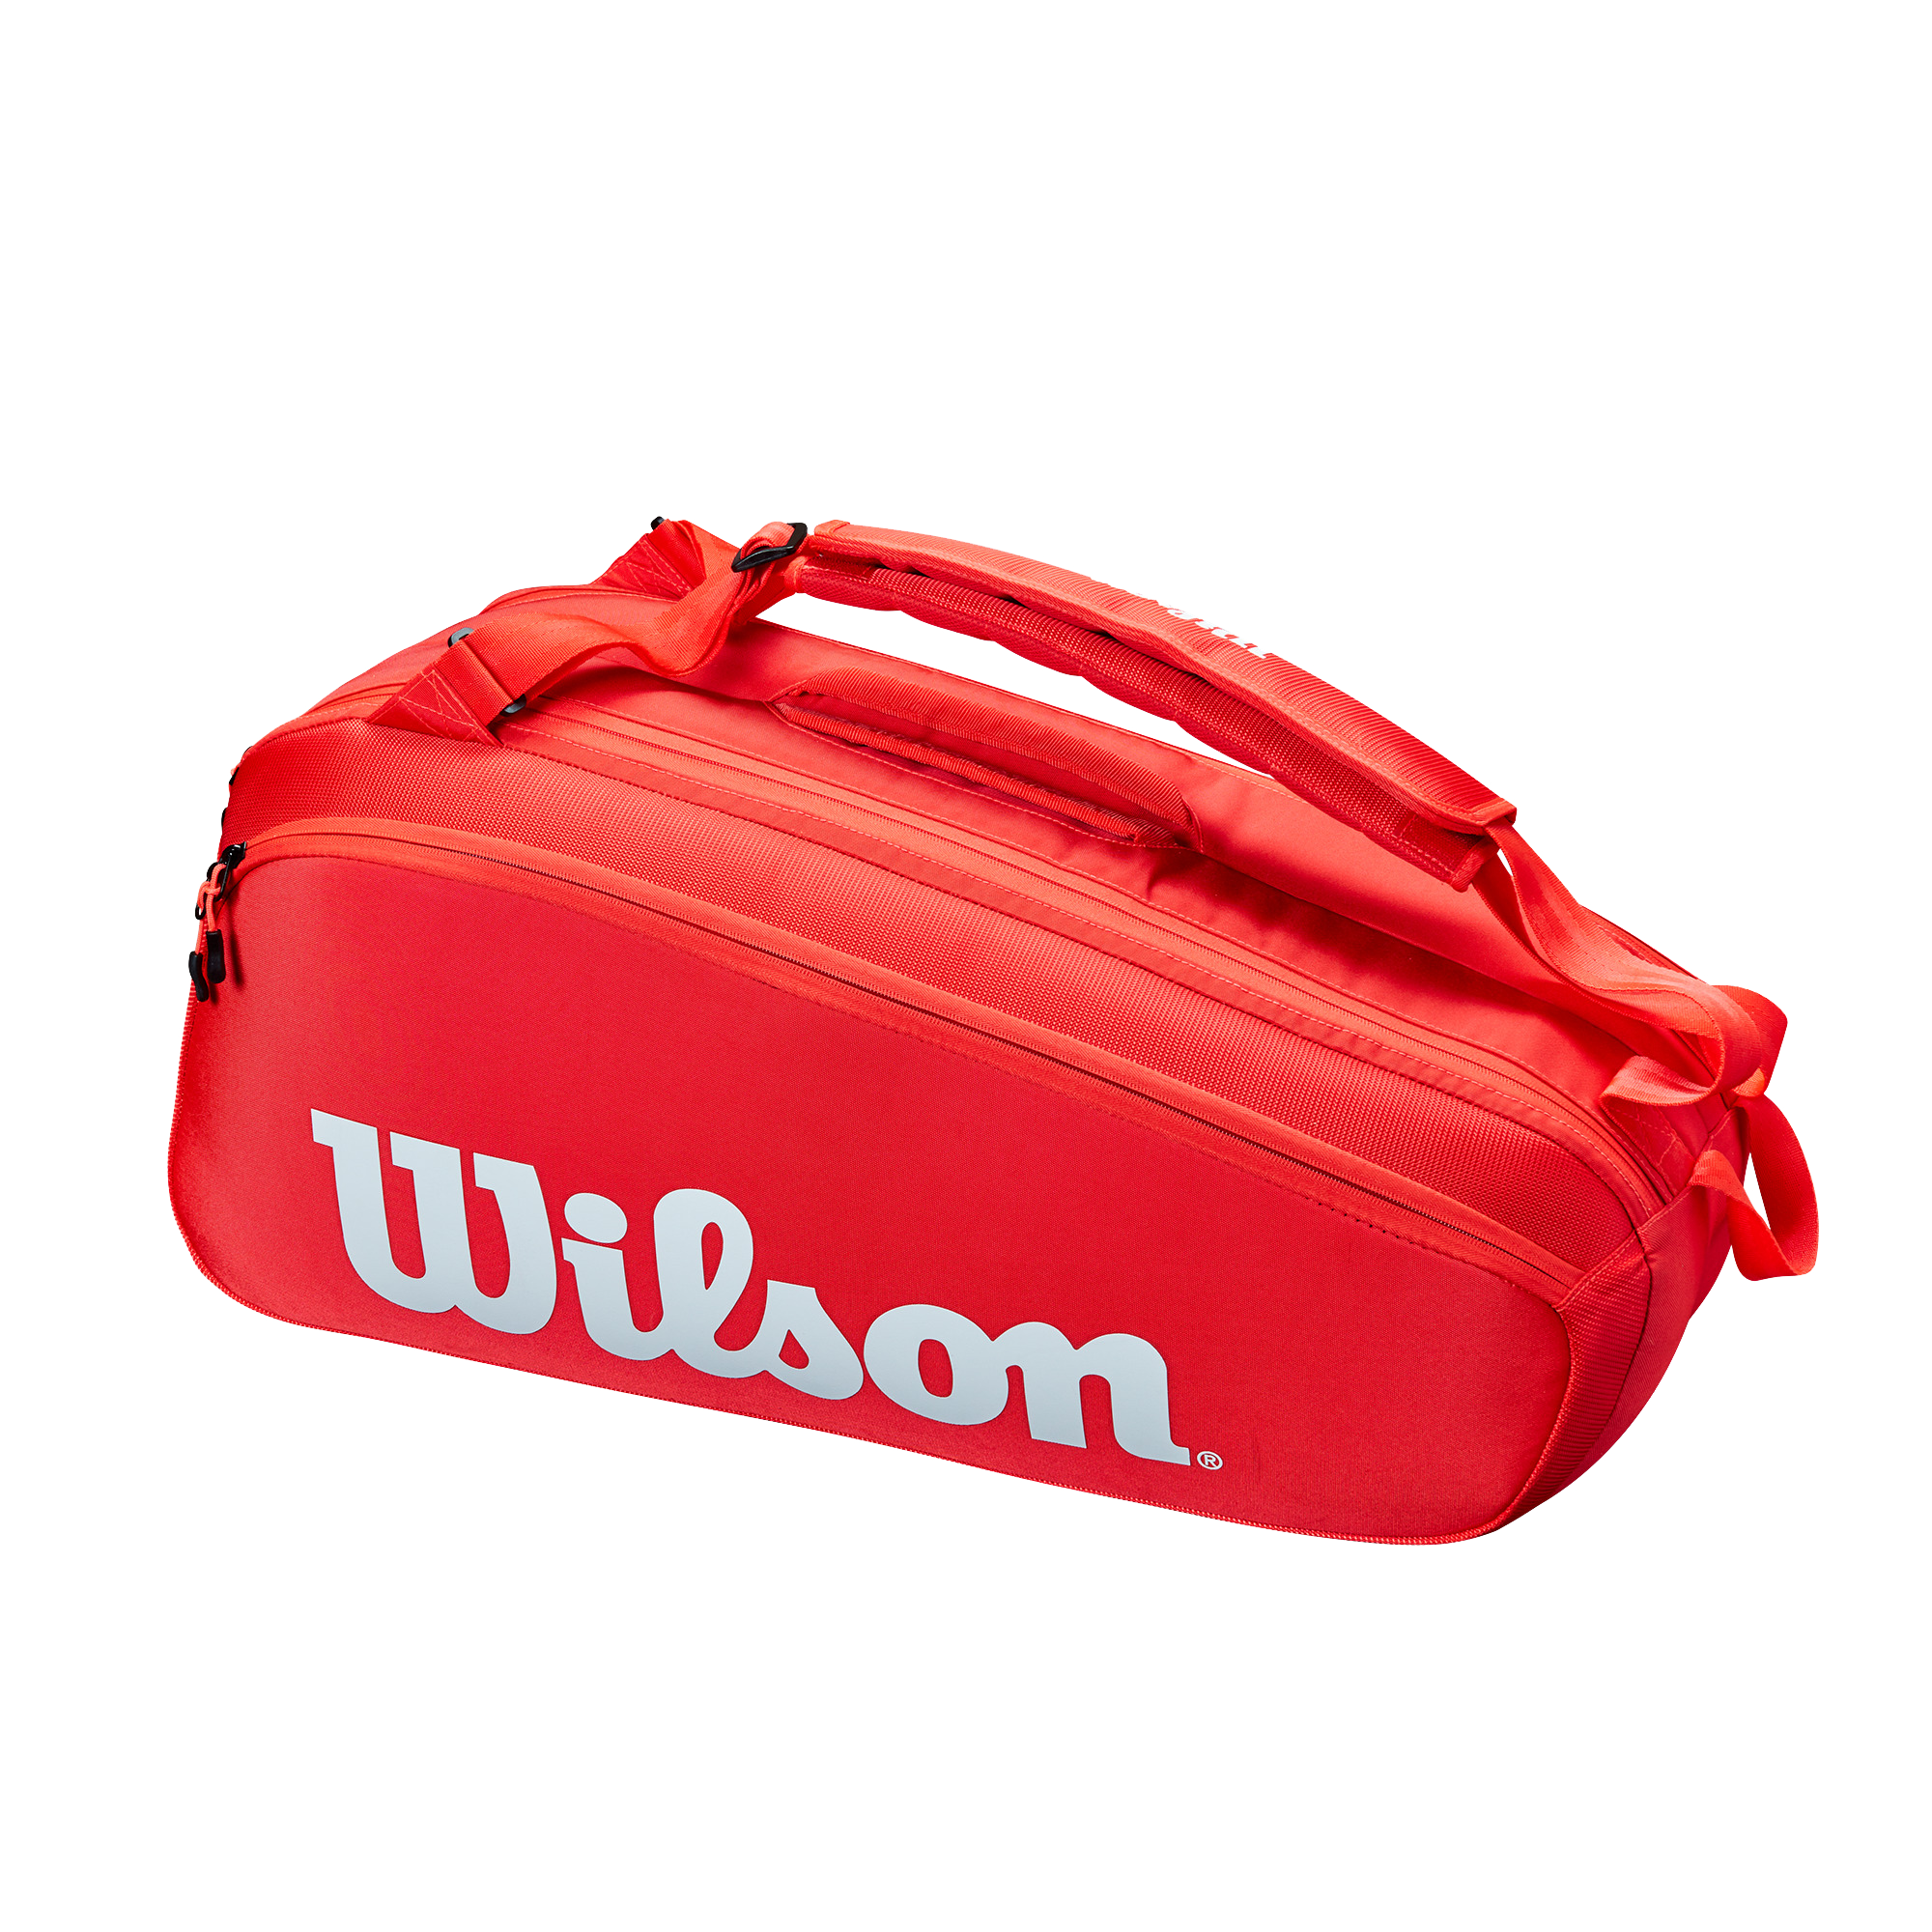 Accessory Storage Wilson Classic Tennis Racket Bag Outdoors & Sports Equipment 